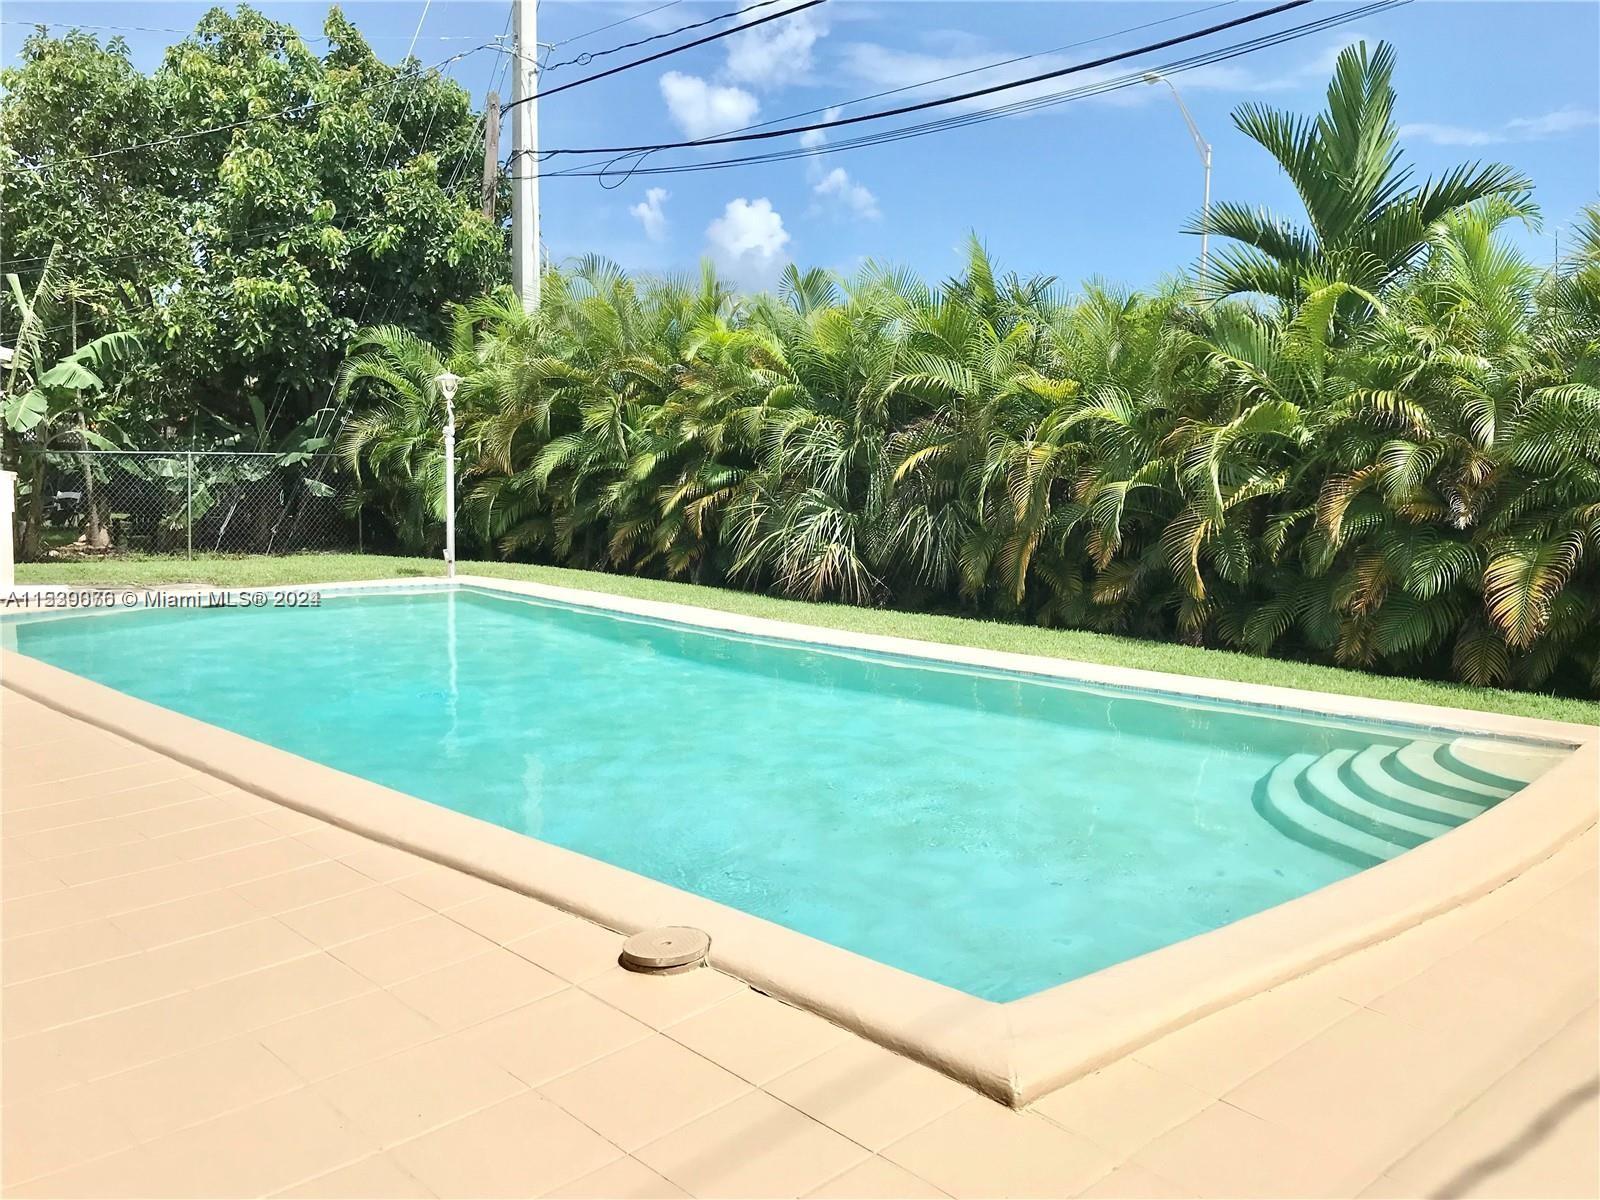 Property for Sale at 2060 Ne 185th Ter, North Miami Beach, Miami-Dade County, Florida - Bedrooms: 4 
Bathrooms: 3  - $1,155,000